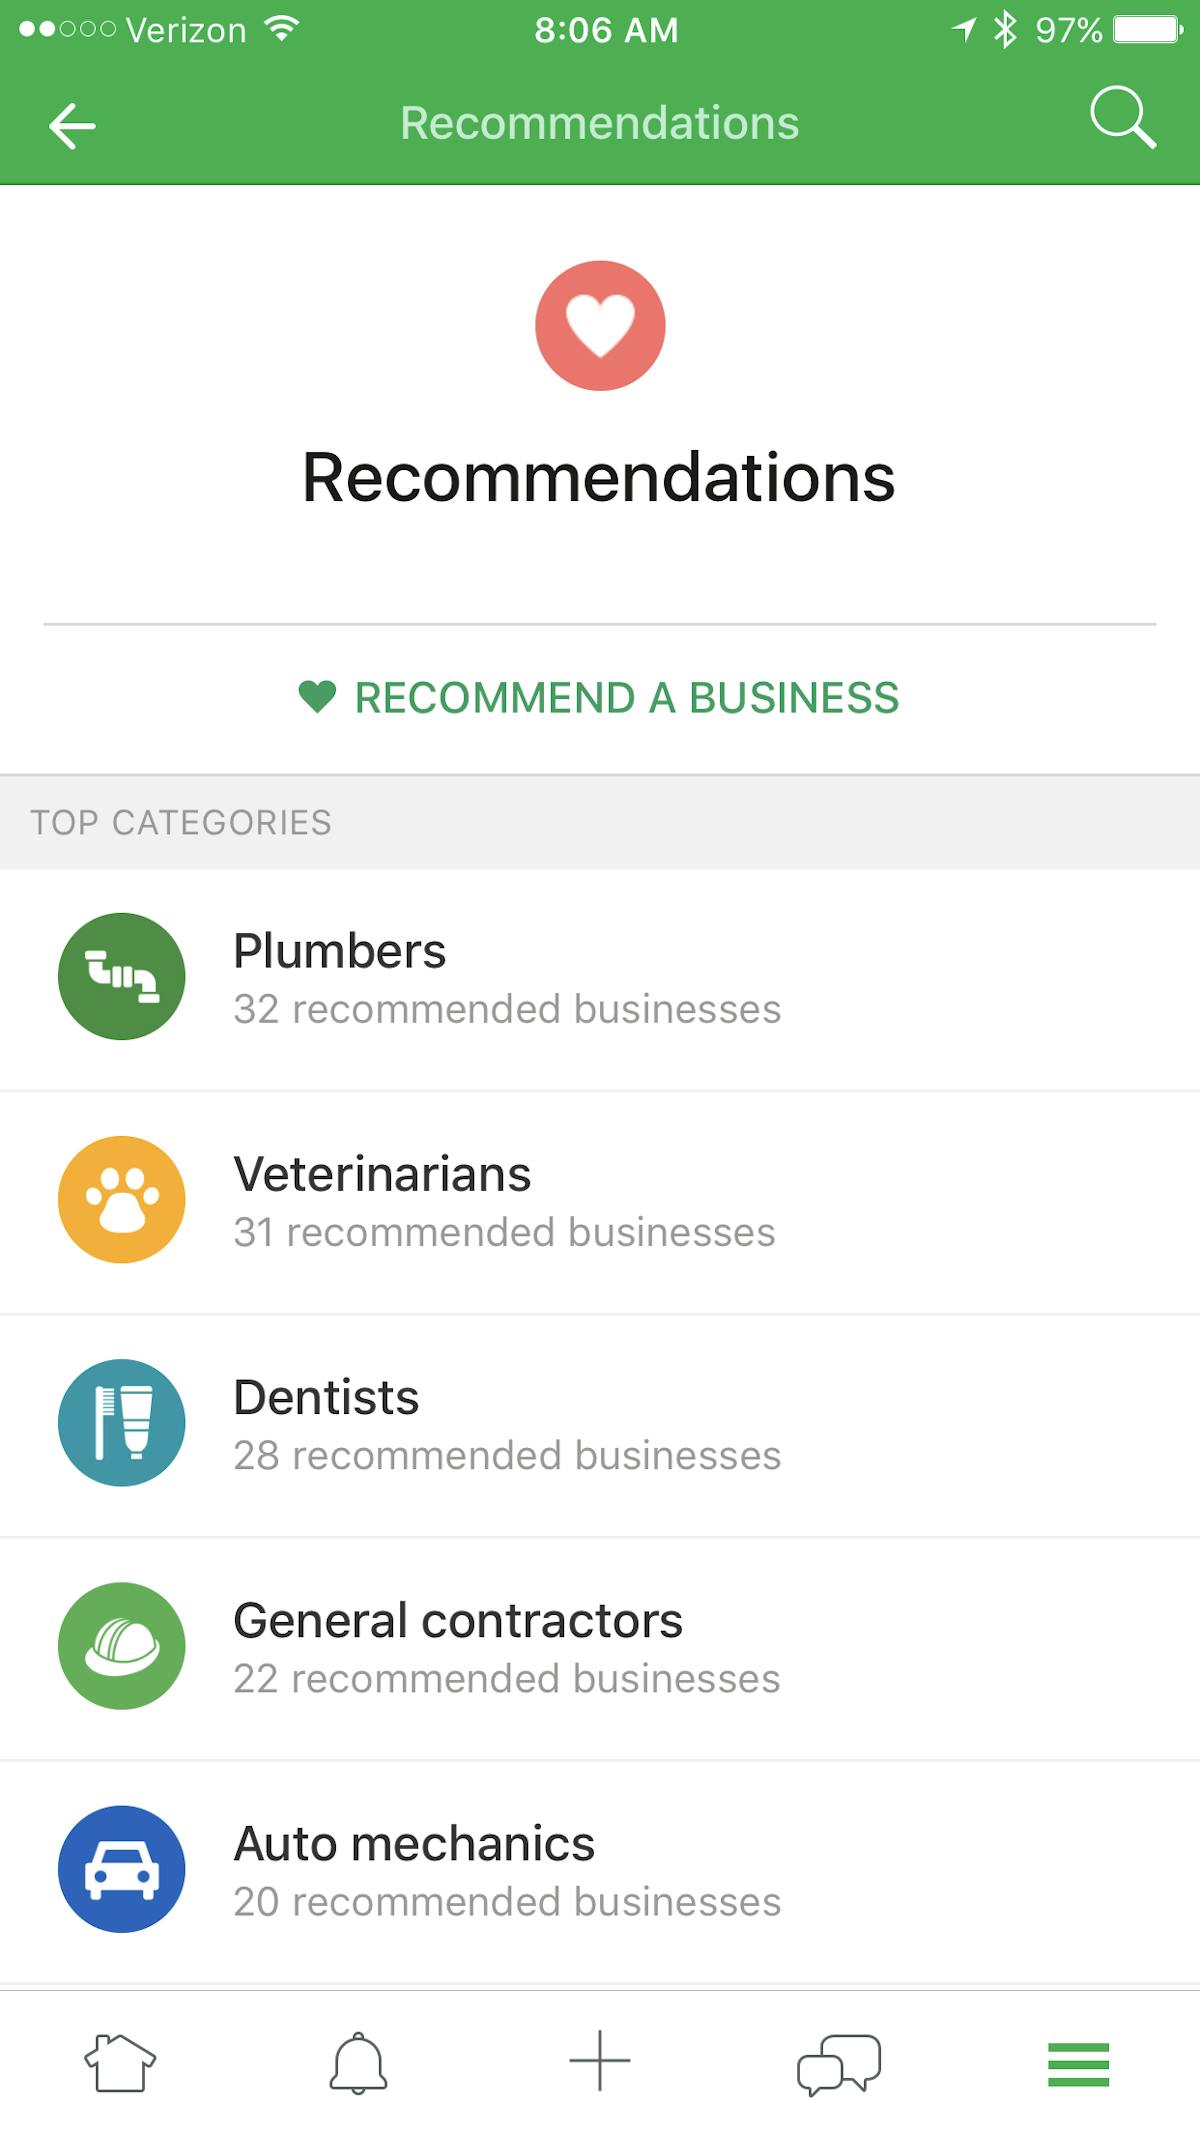 Nextdoor Image For Dentists 2 Recommendations